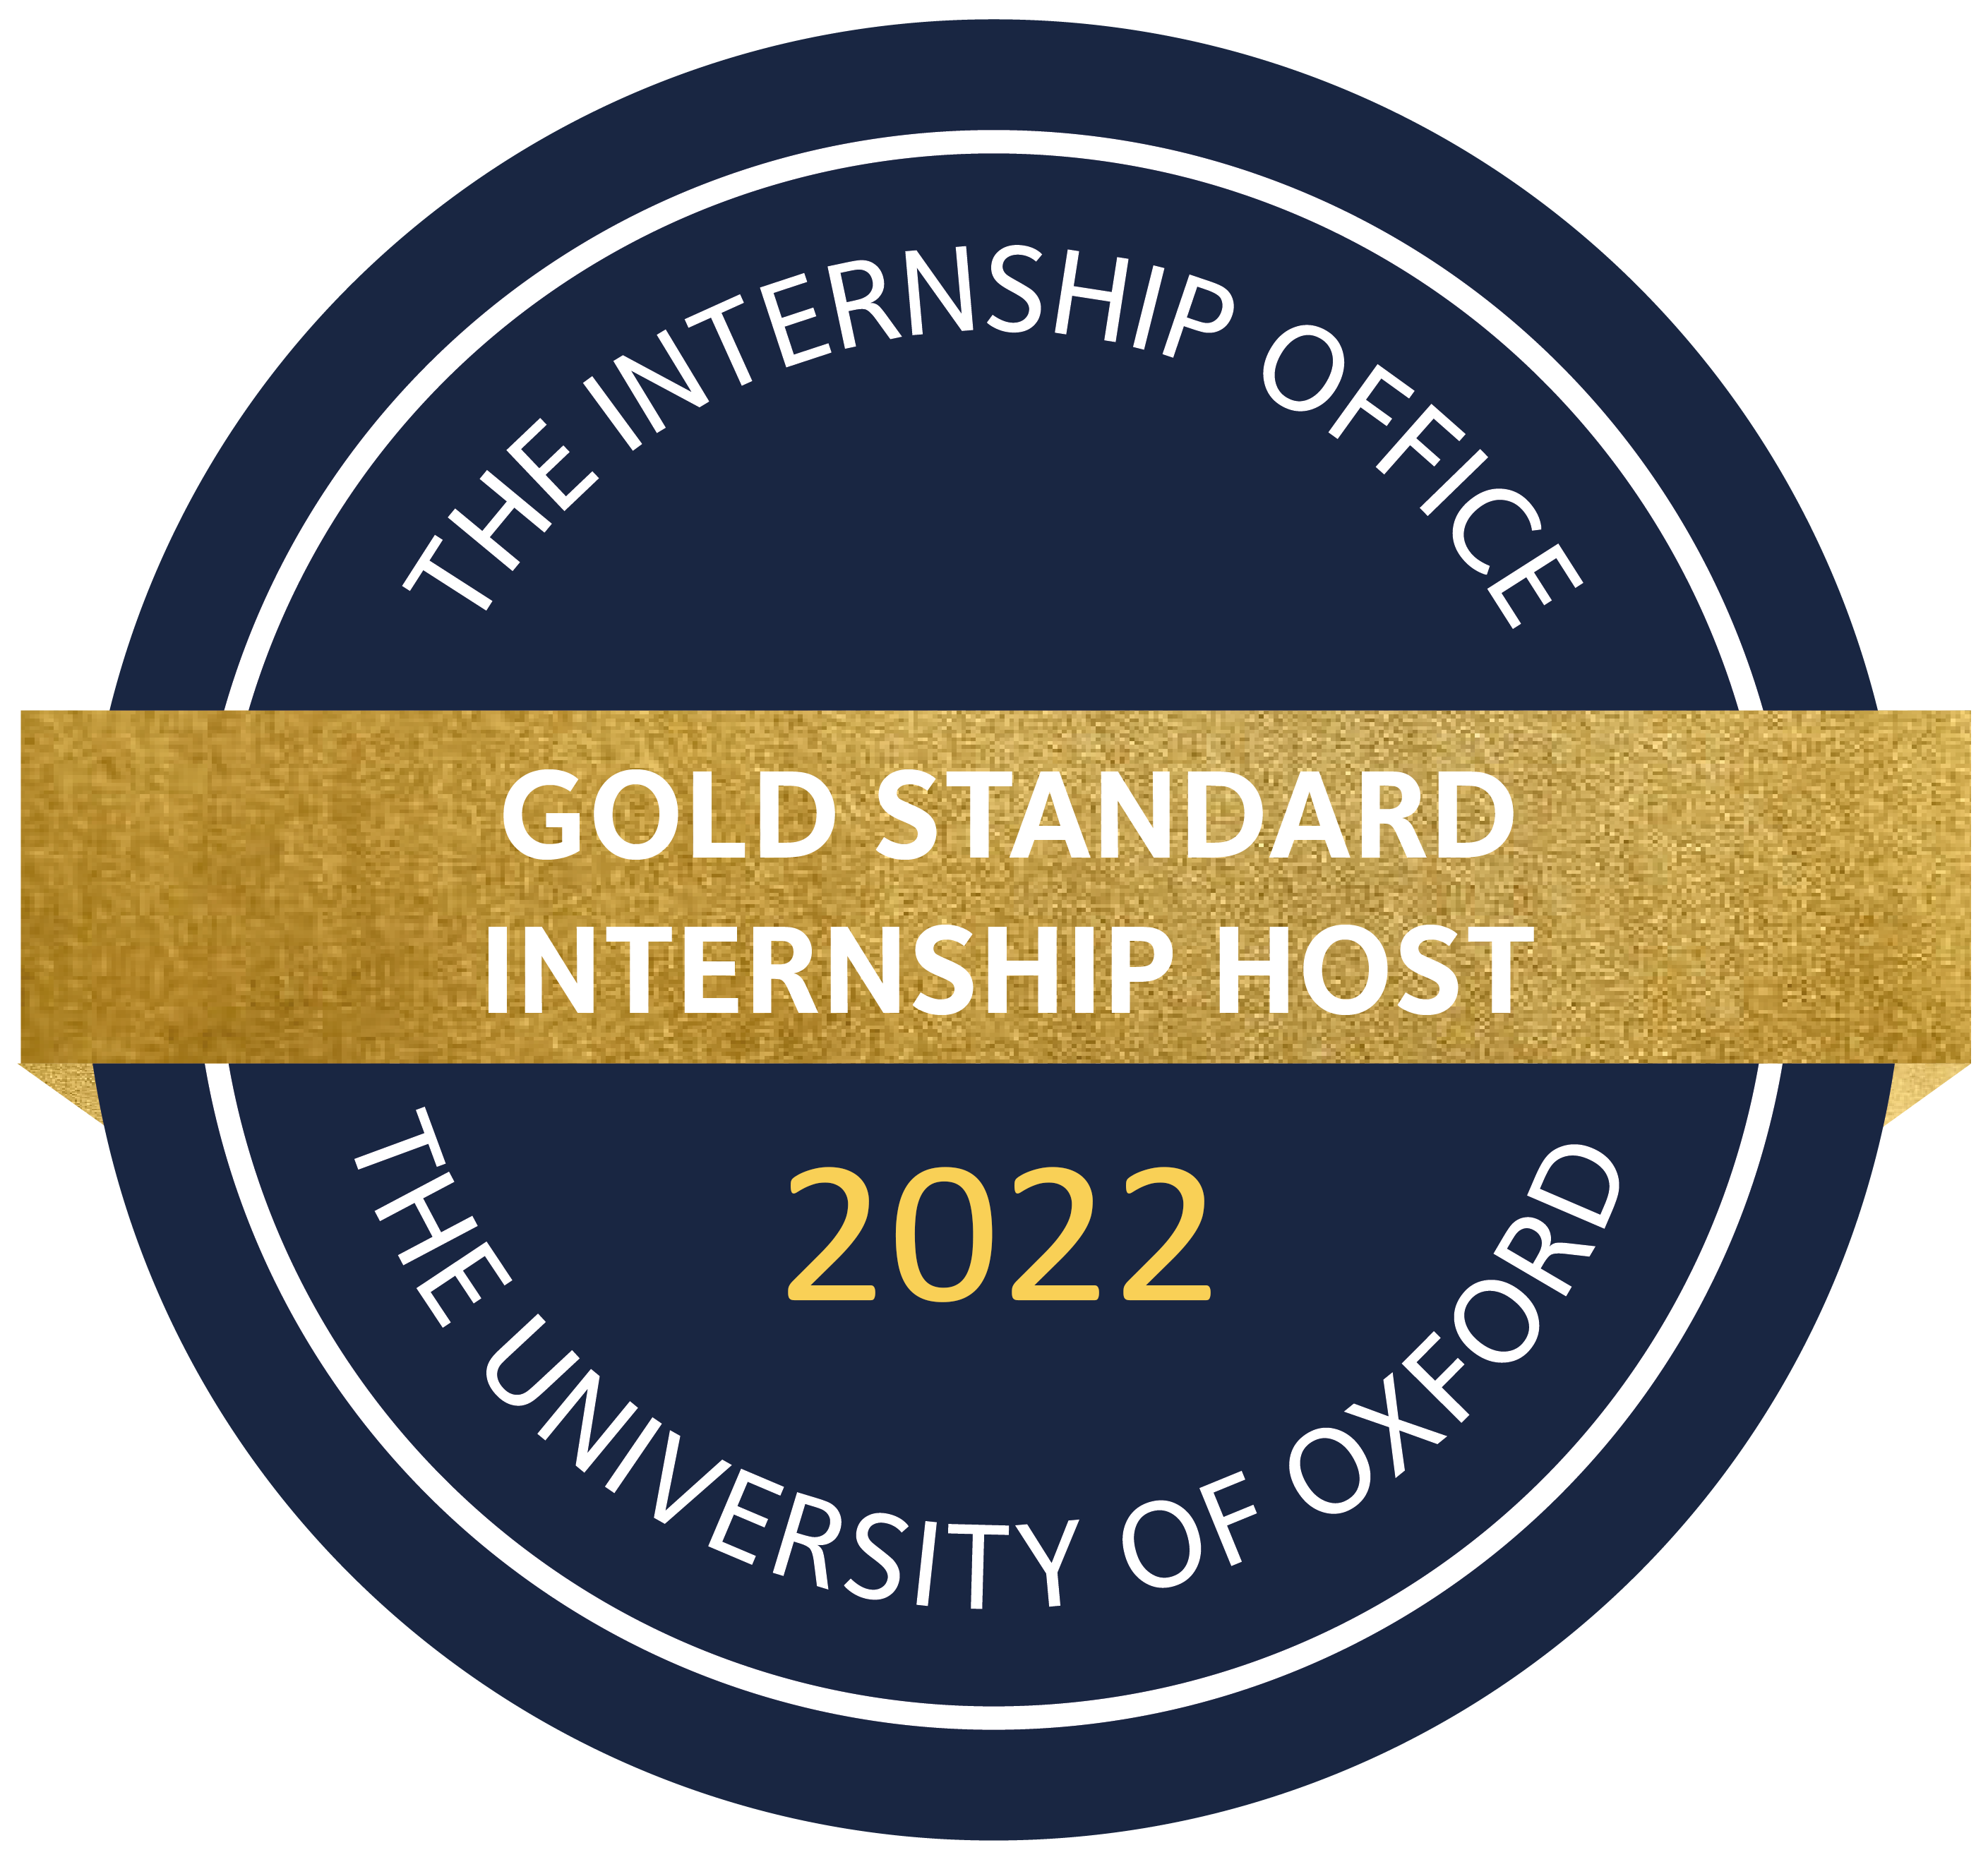 Gold Standard Internship Host badge